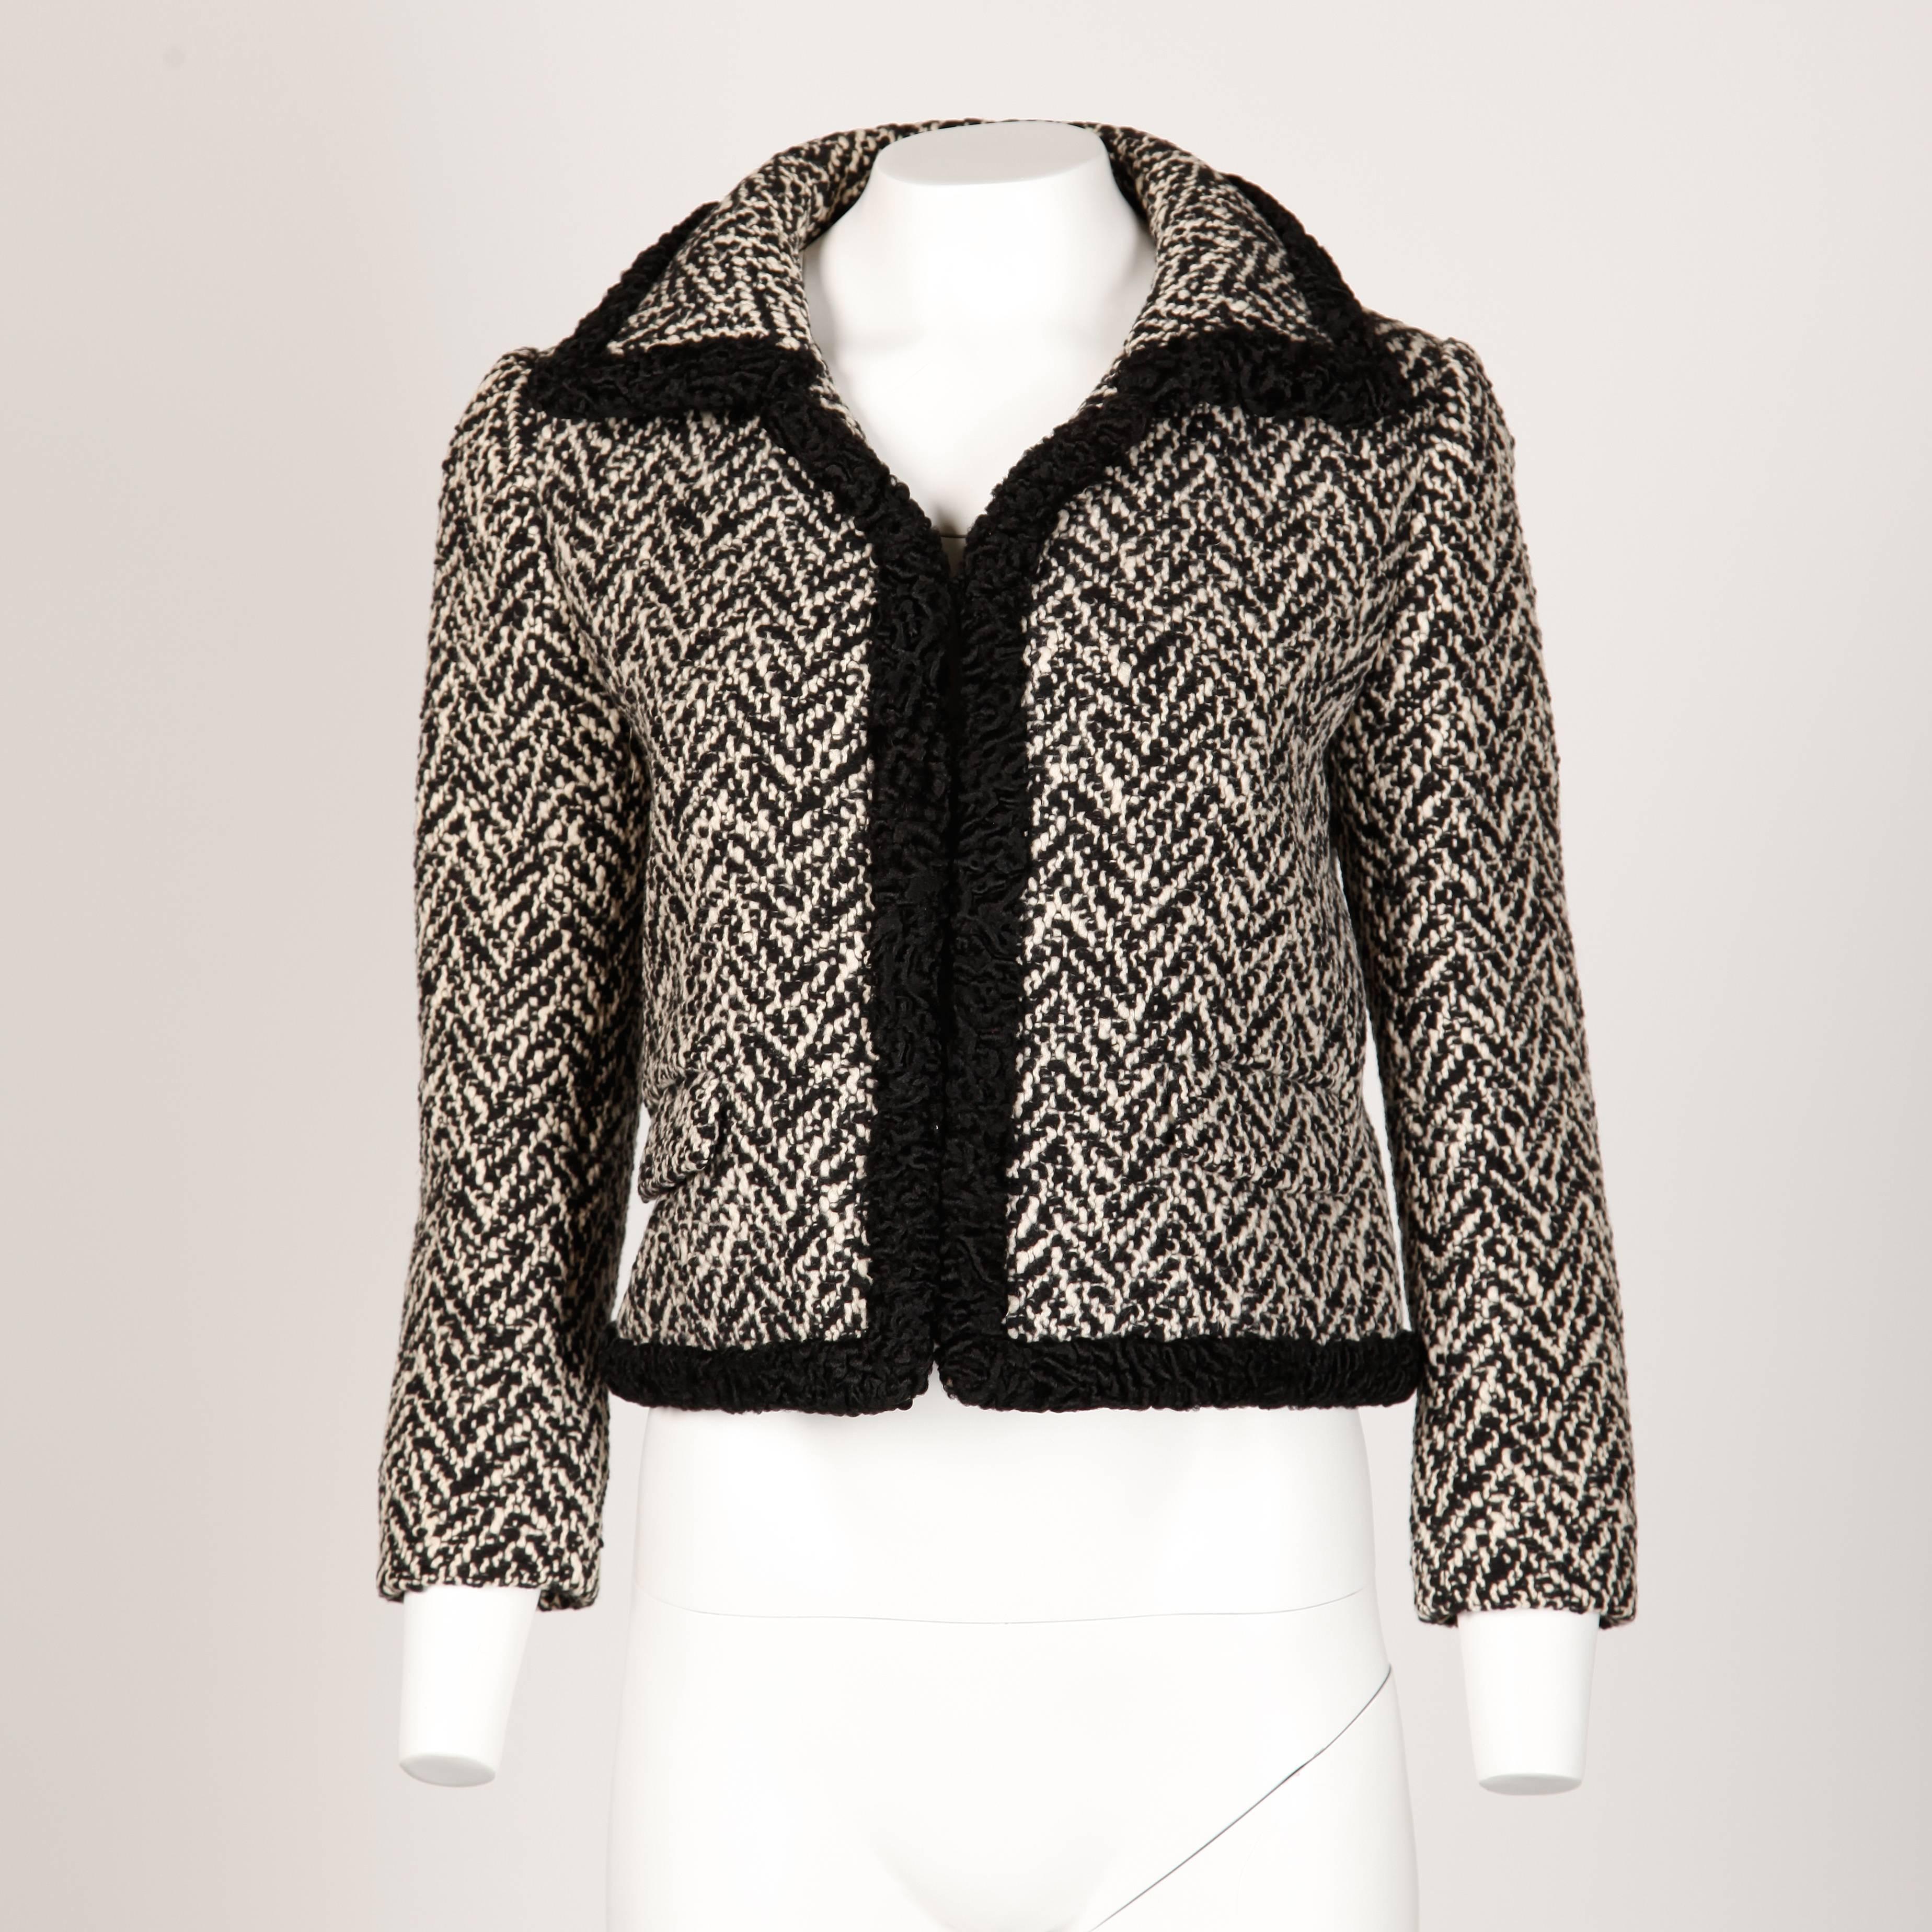 Black Ben Zuckerman 1960s Vintage Wool Tweed Jacket with Persian Lamb Fur Trim For Sale